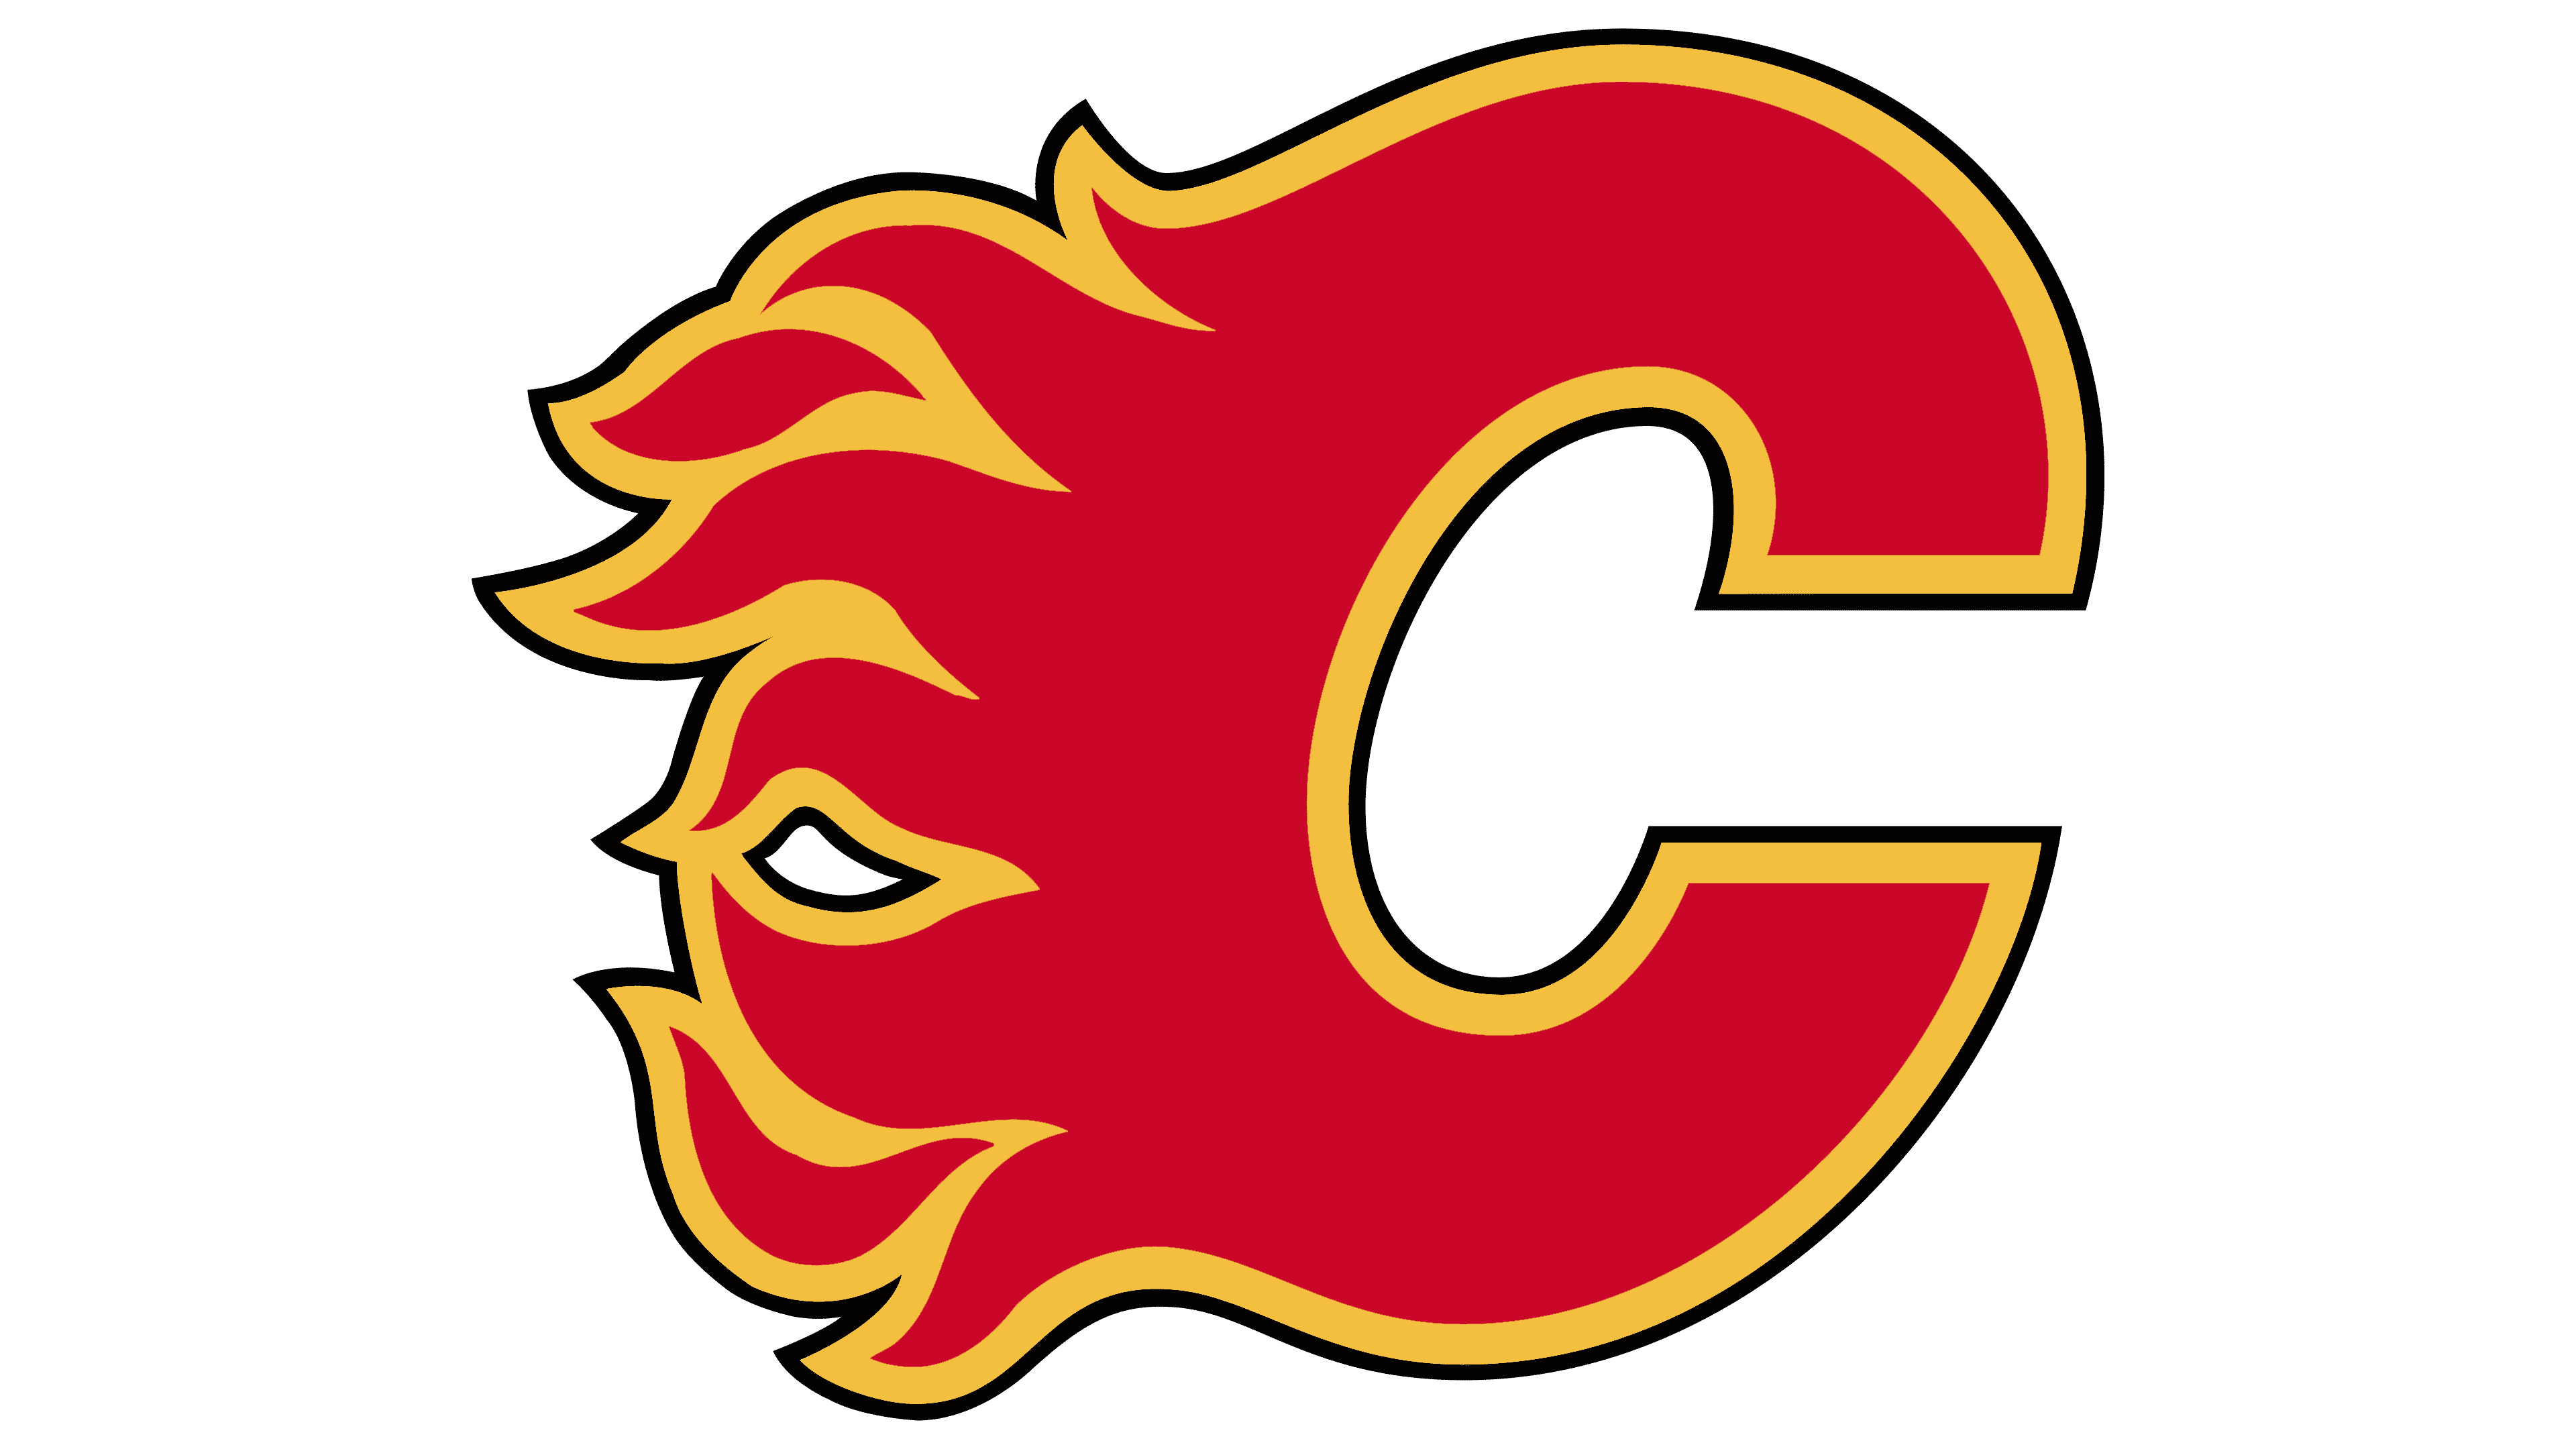 Calgary Flames | AlyxsAliezah